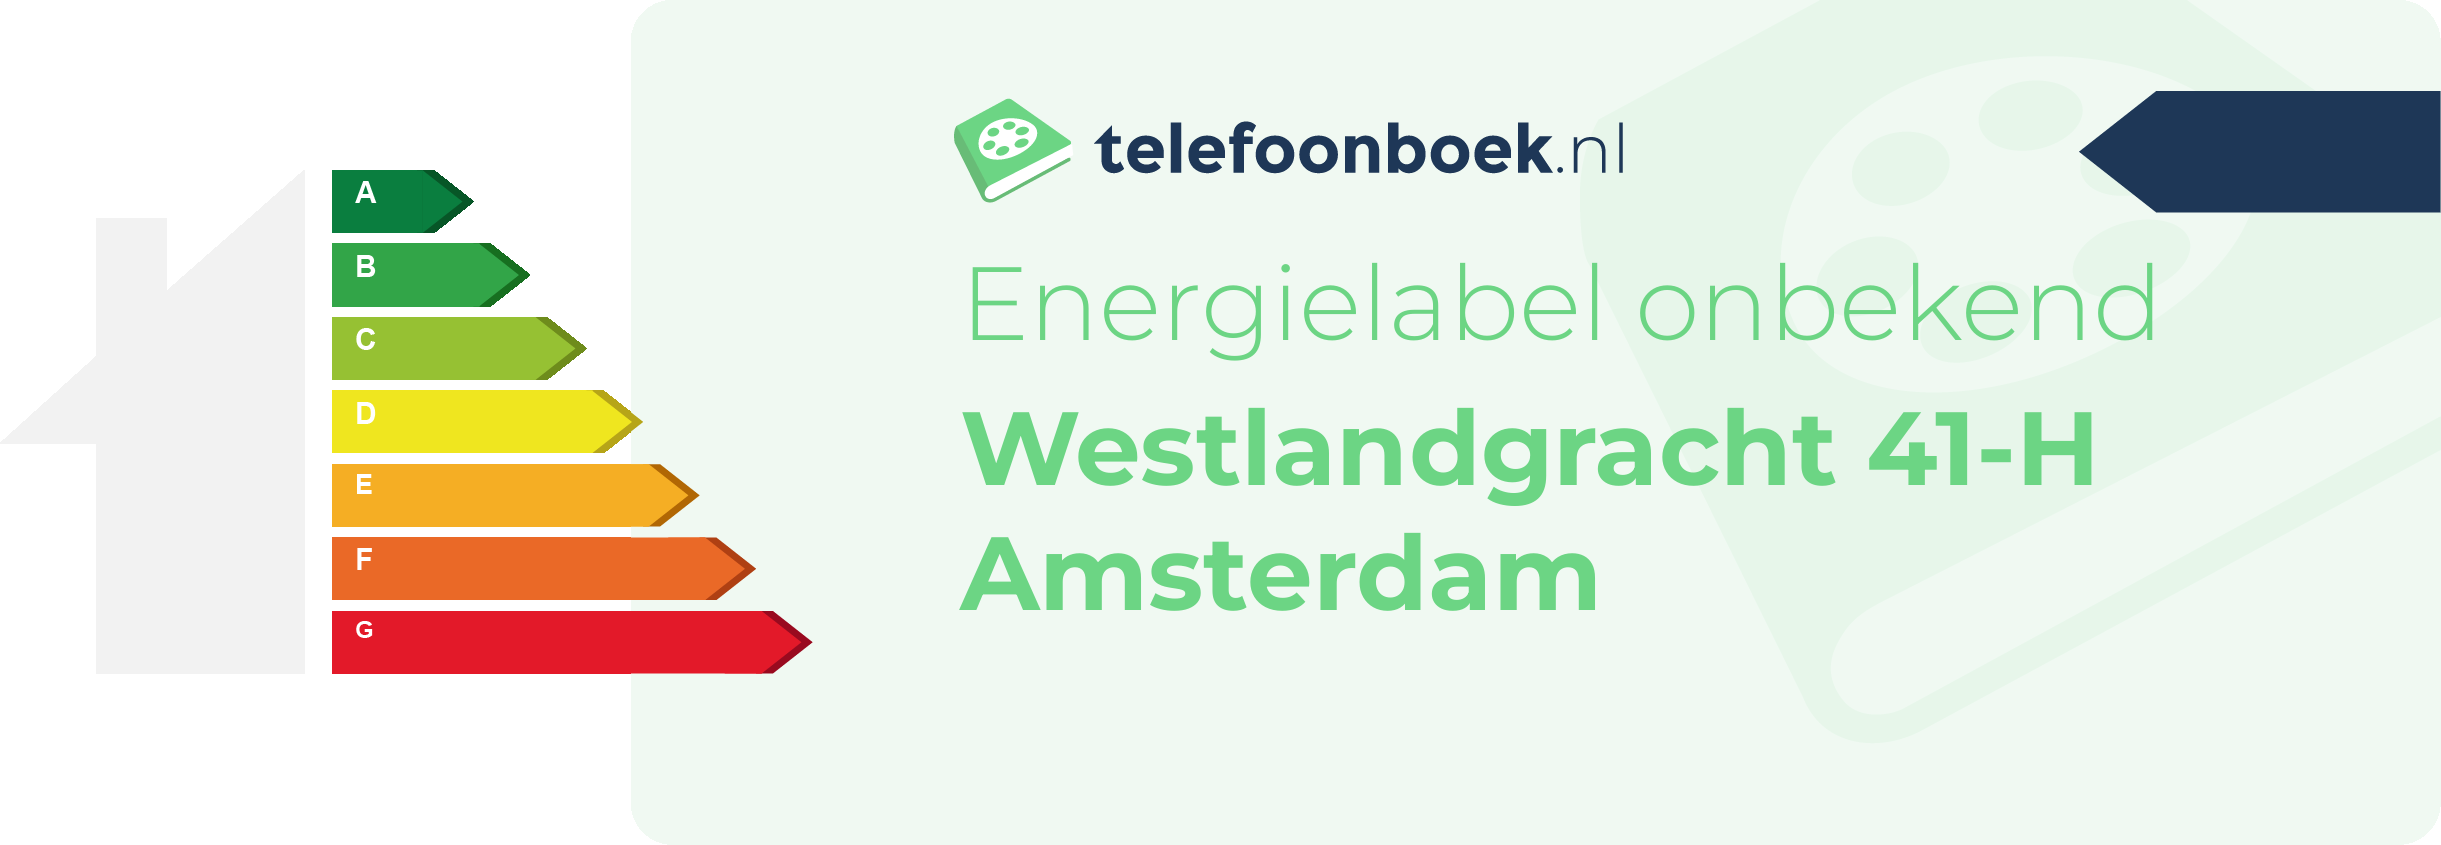 Energielabel Westlandgracht 41-H Amsterdam